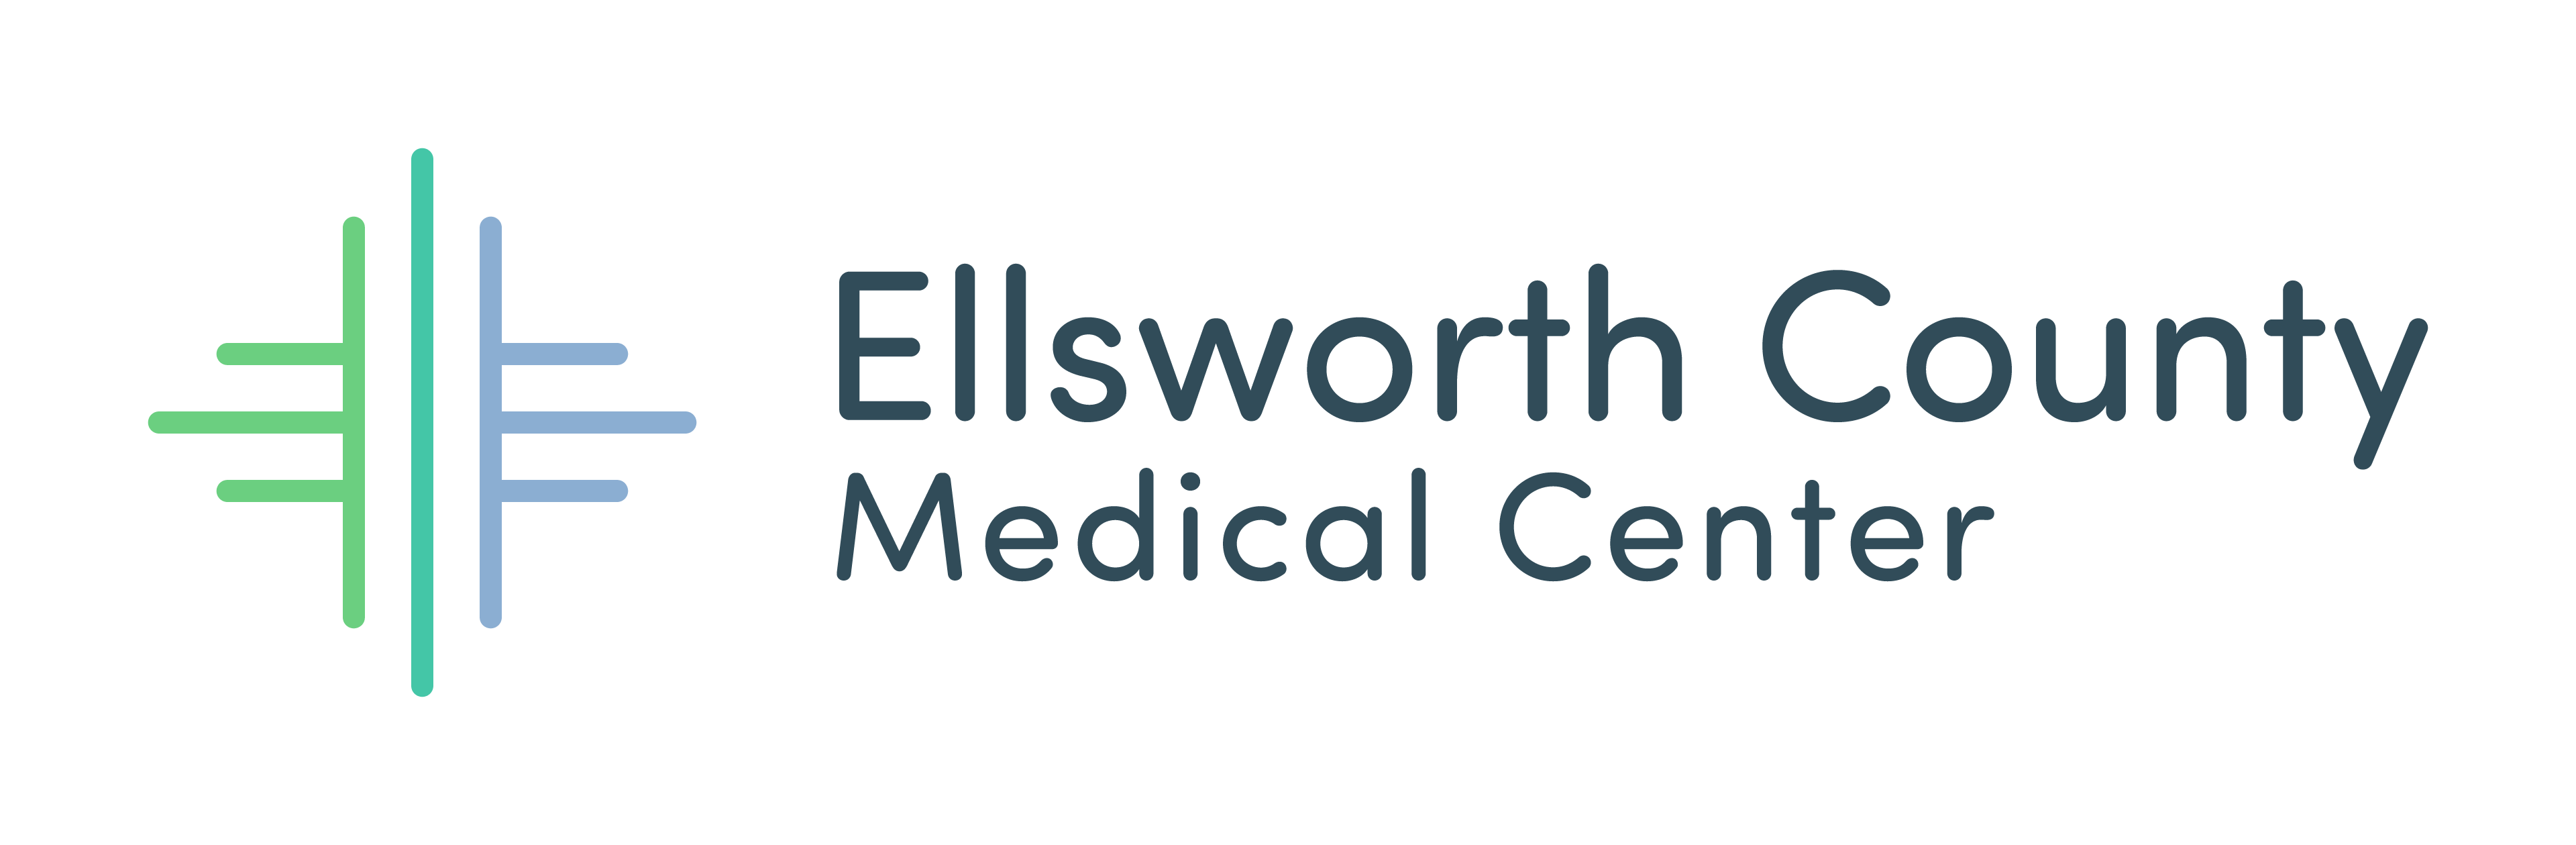 Ellsworth County Medical Center